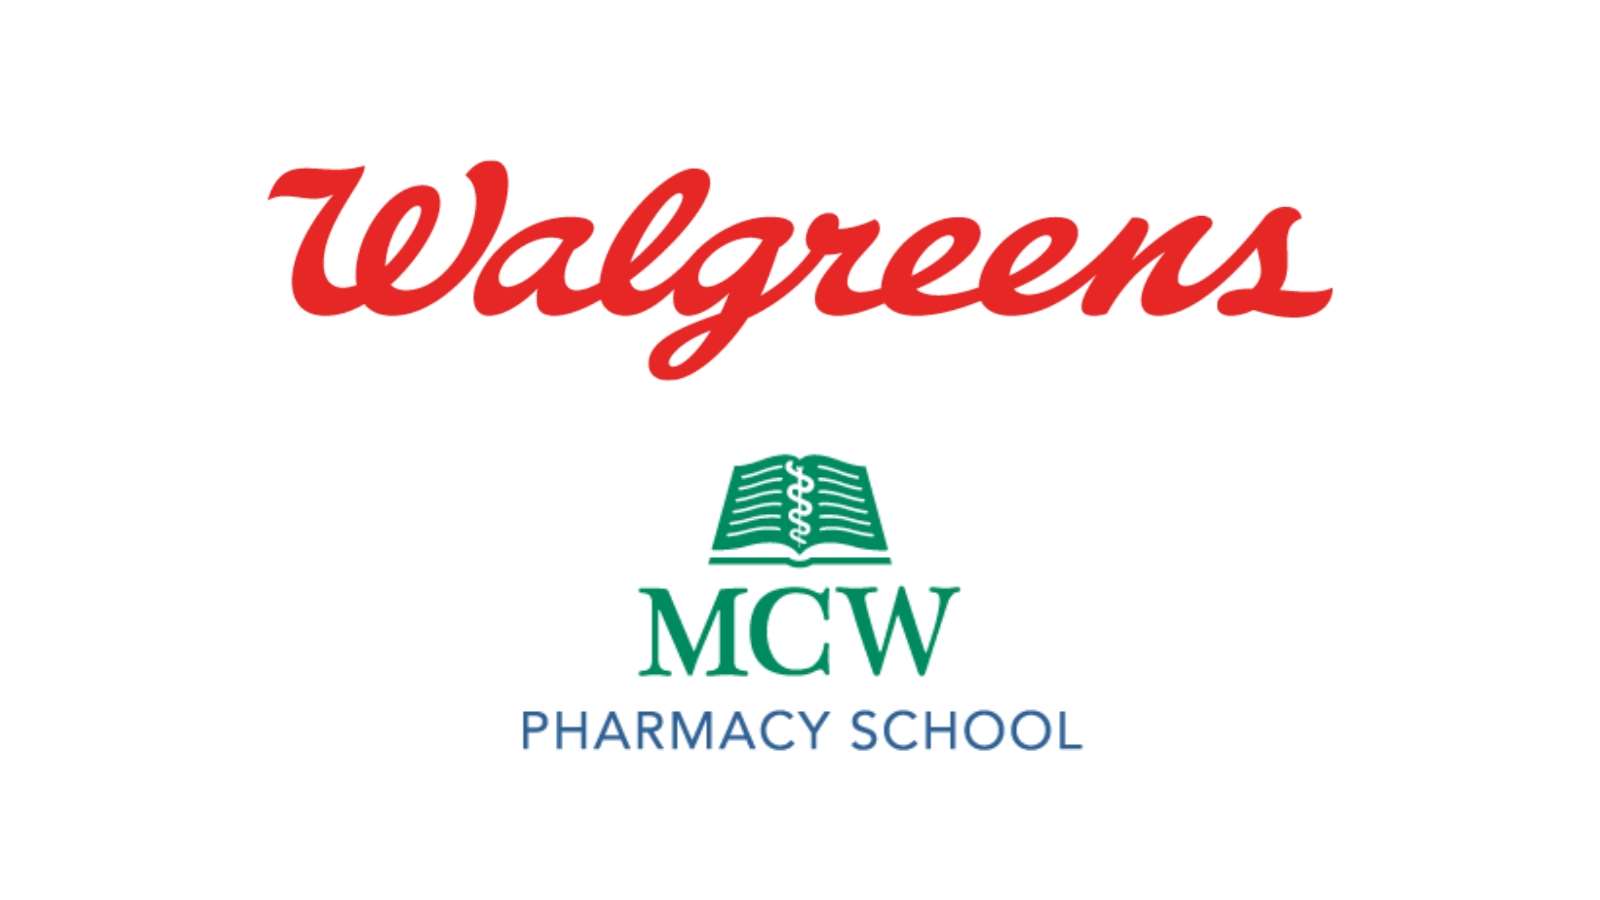 Walgreens and MCW School of Pharmacy logos.